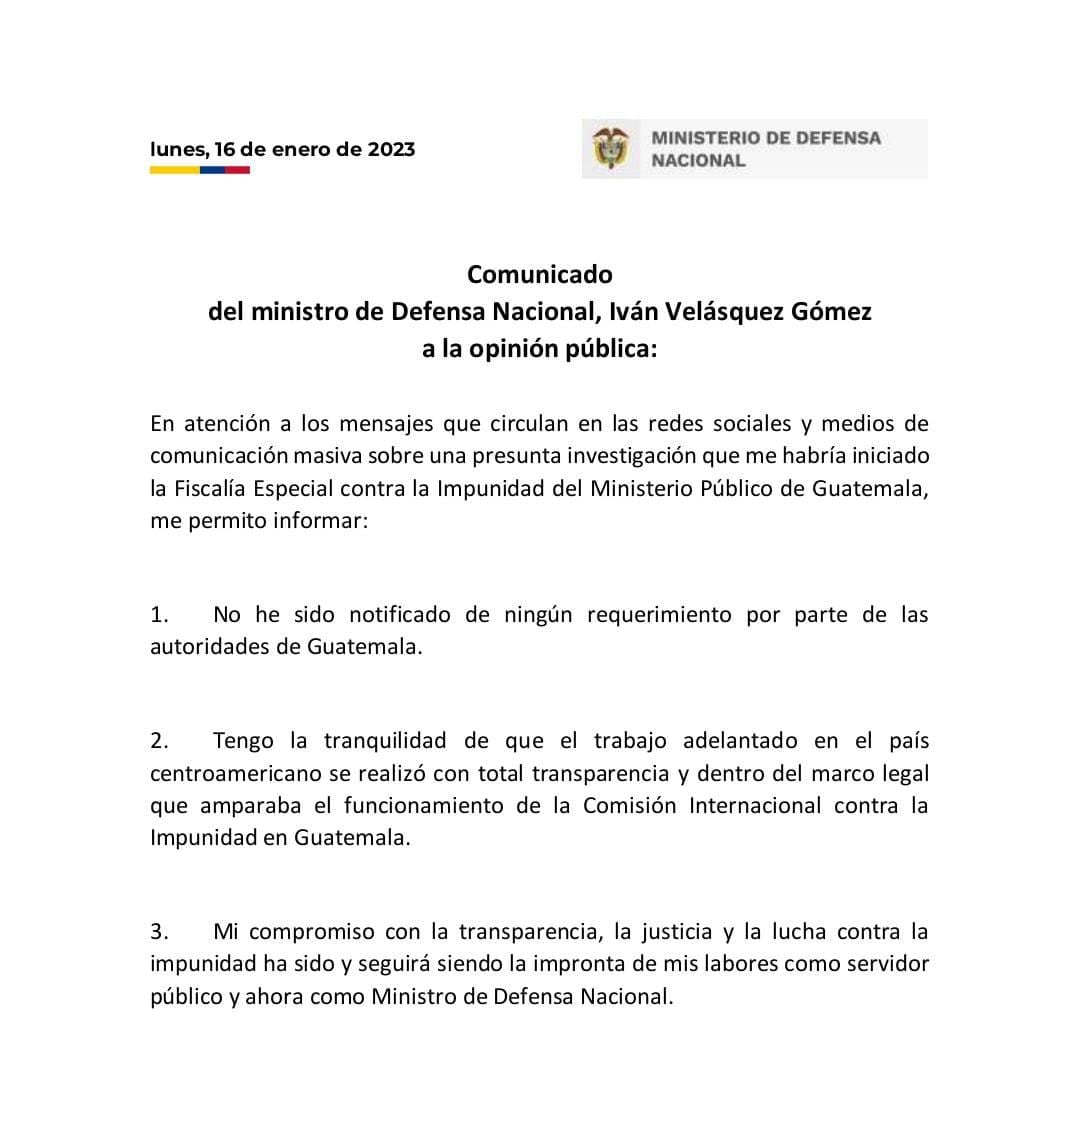 Comunicado de prensa del ministro Velásquez sobre su caso en Guatemala.